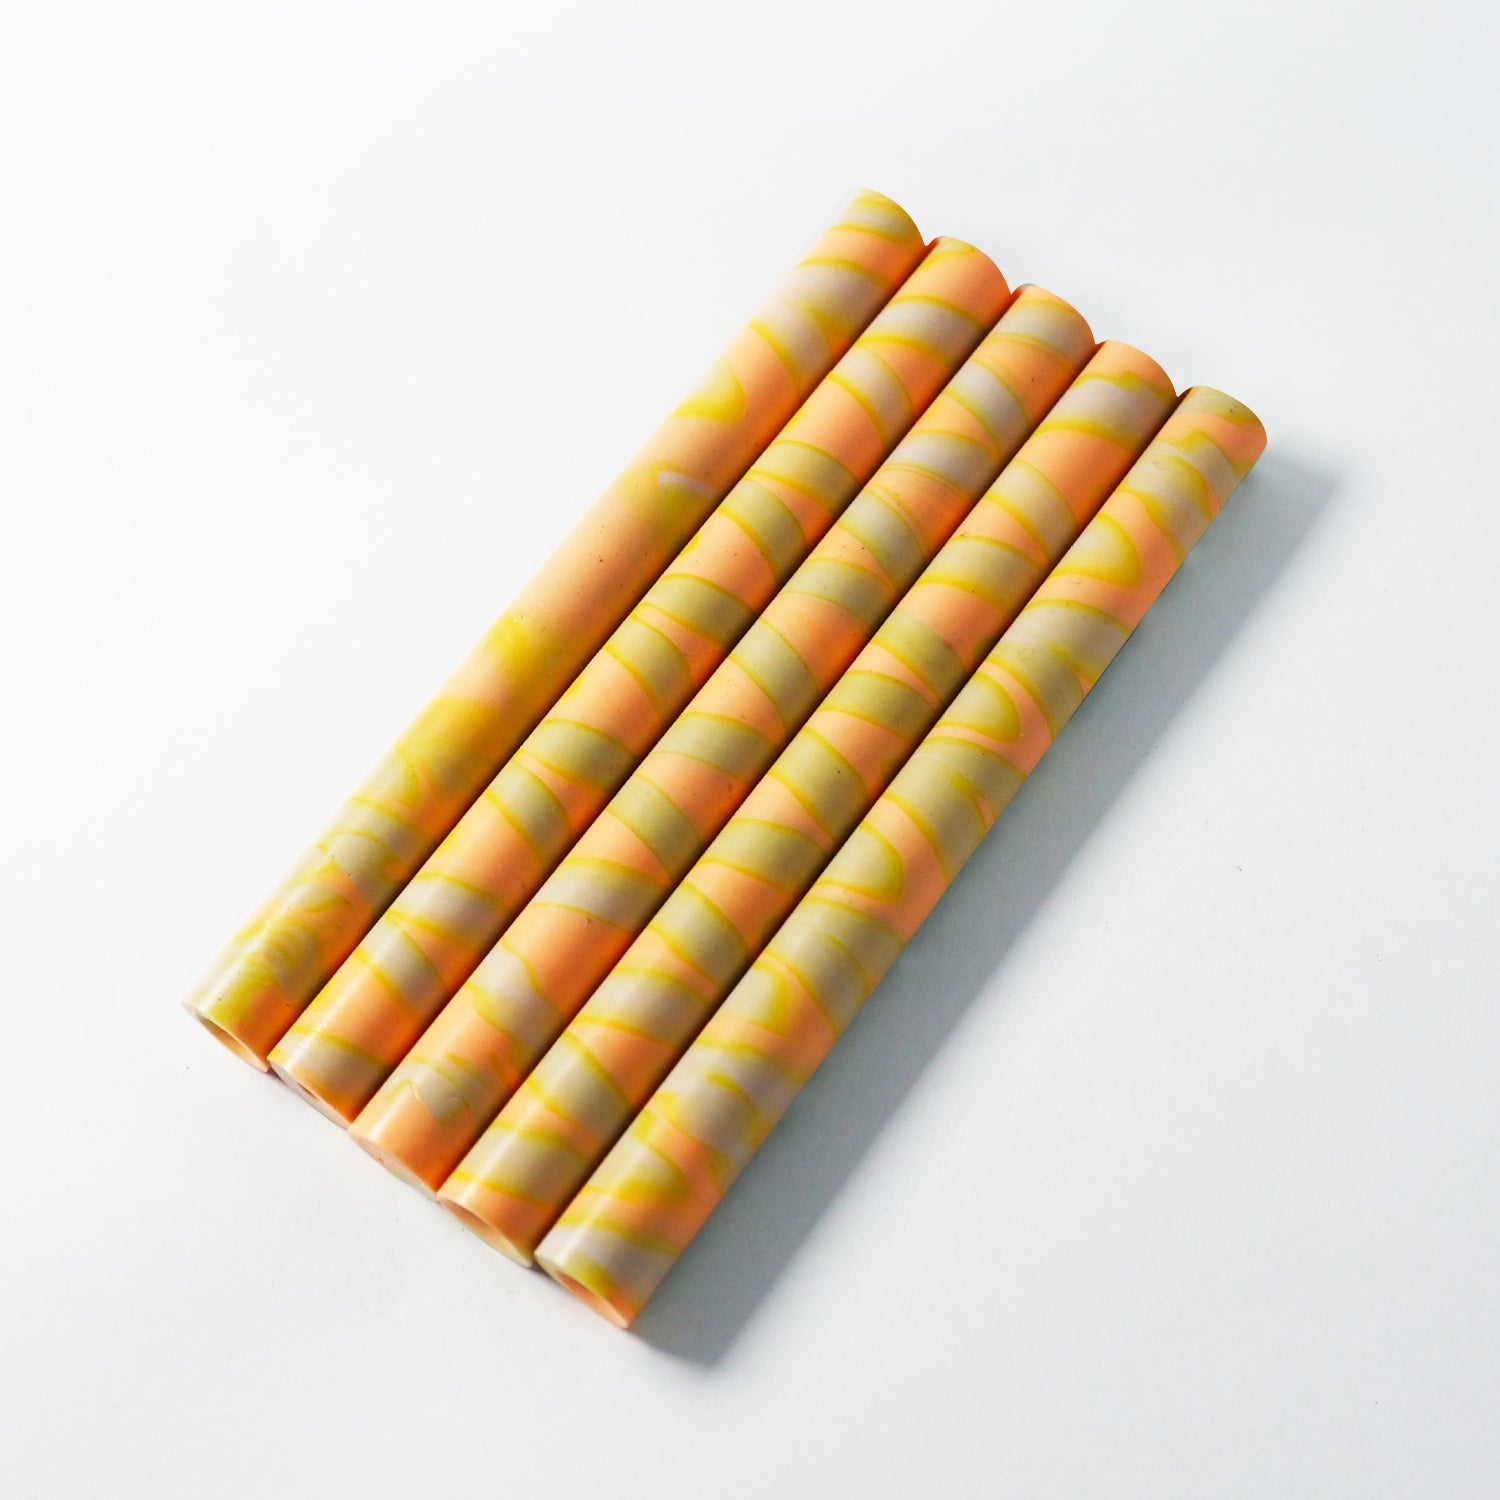 Dreamy Mixed Color Glue Gun Sealing Wax Stick - Mixed Yellow